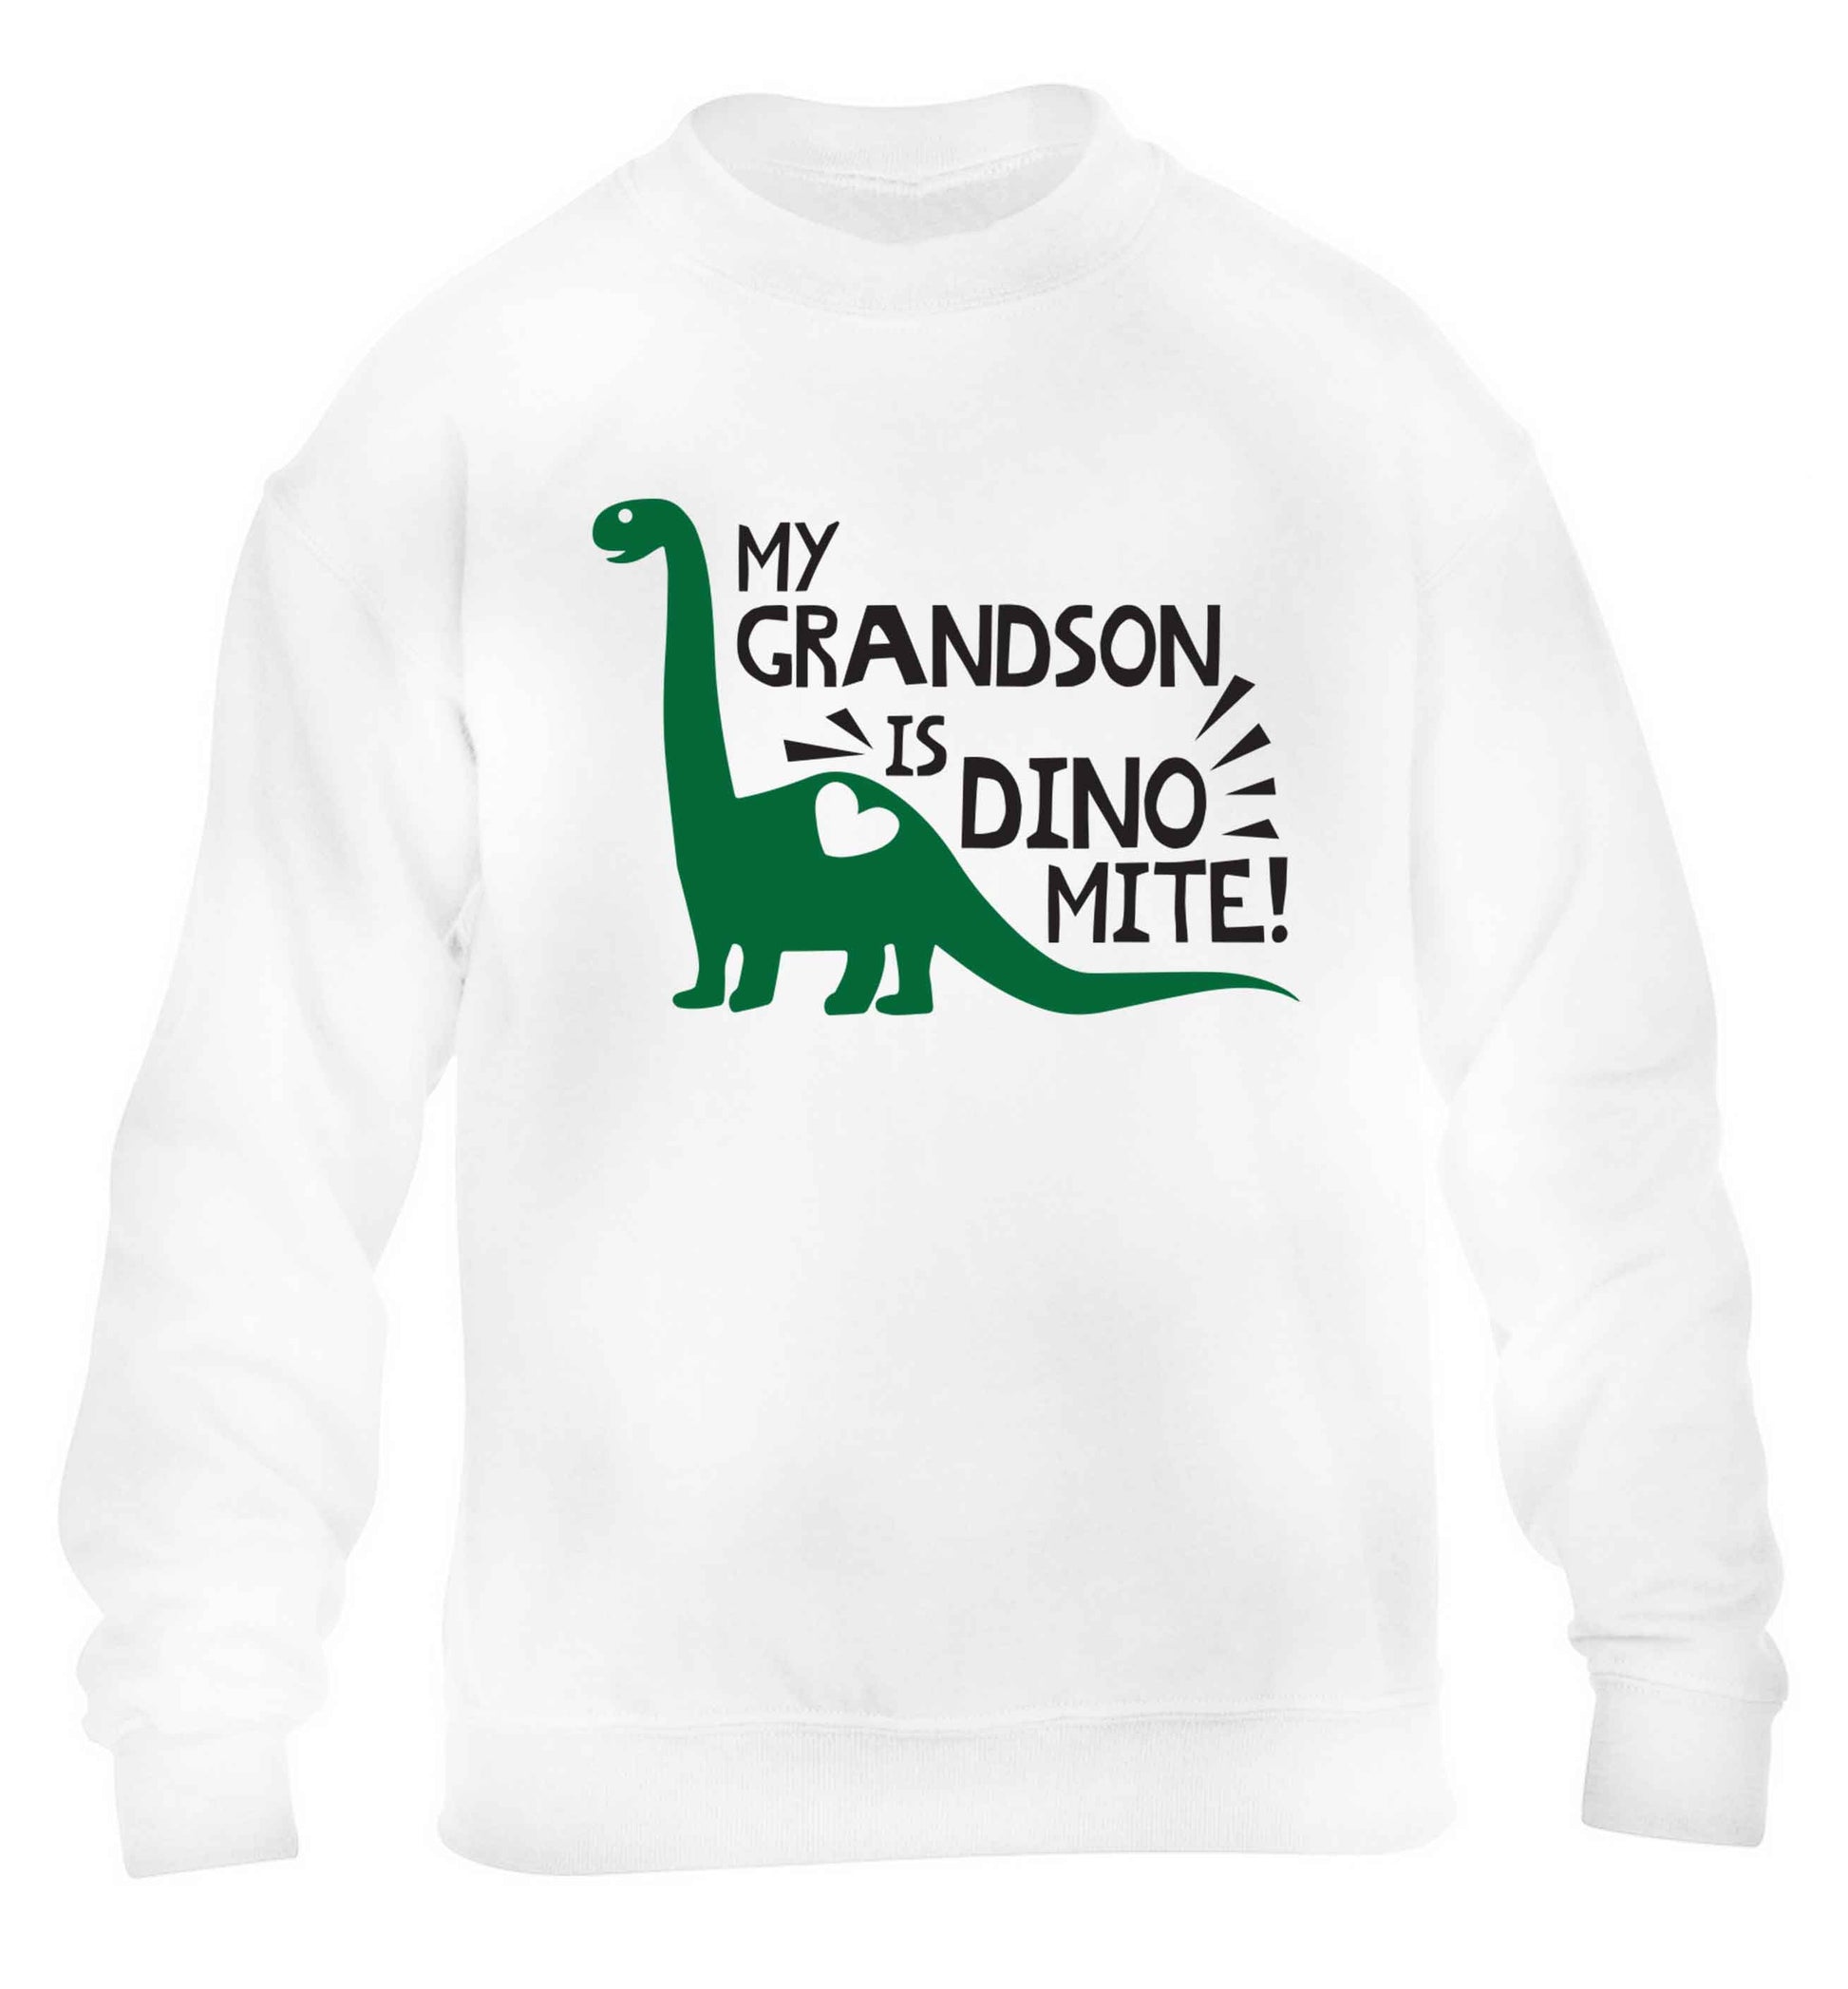 My grandson is dinomite! children's white sweater 12-13 Years